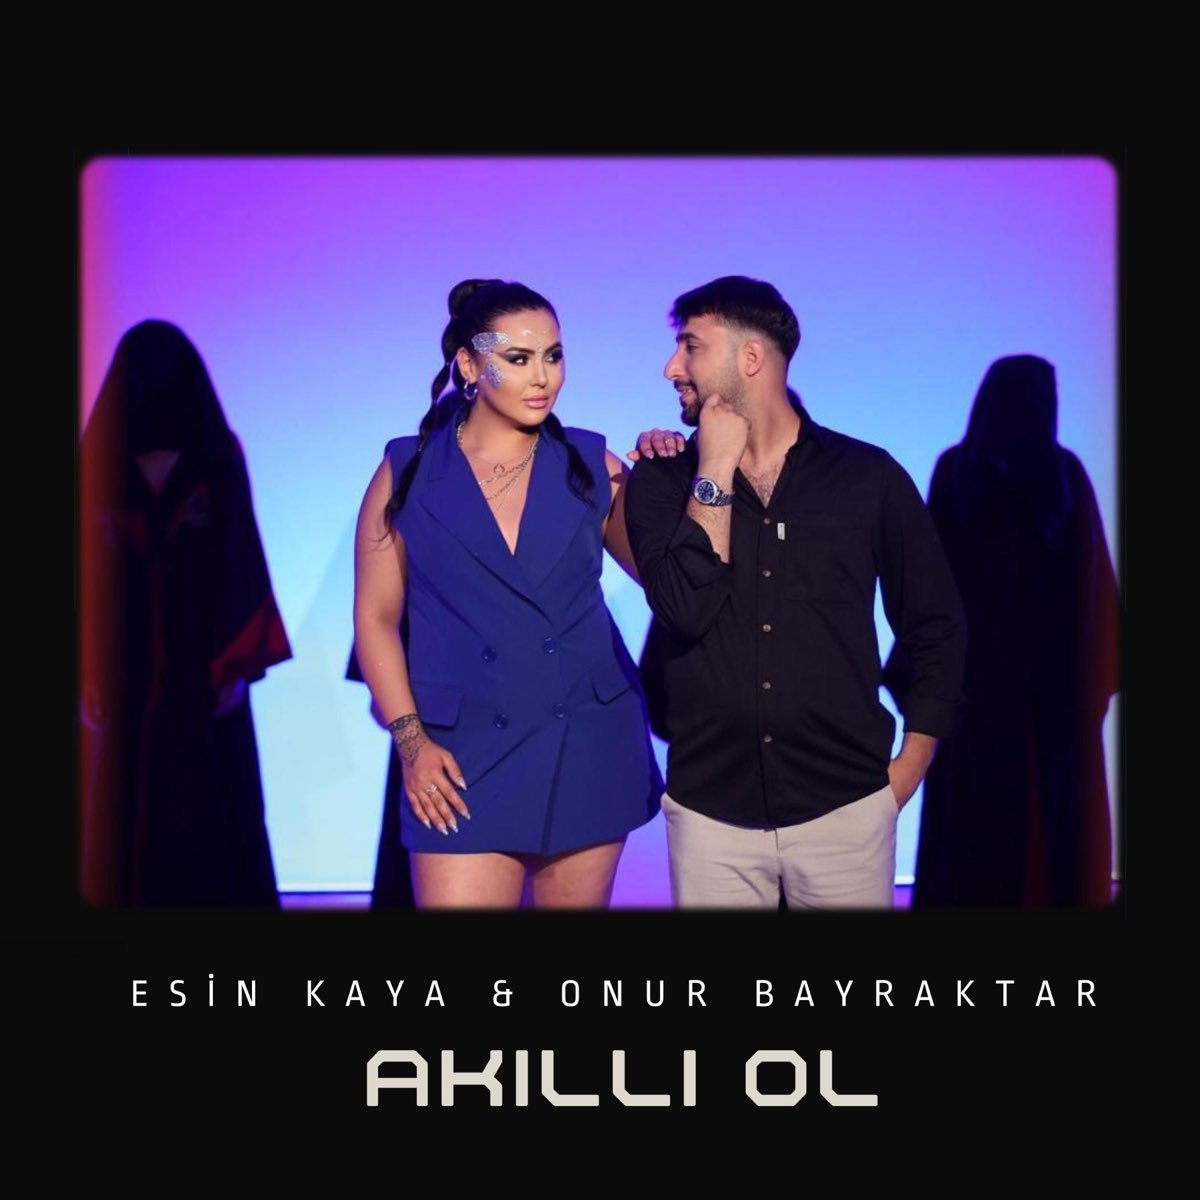 Akıllı Ol - Single - Album by Esin Kaya & Onur Bayraktar - Apple Music